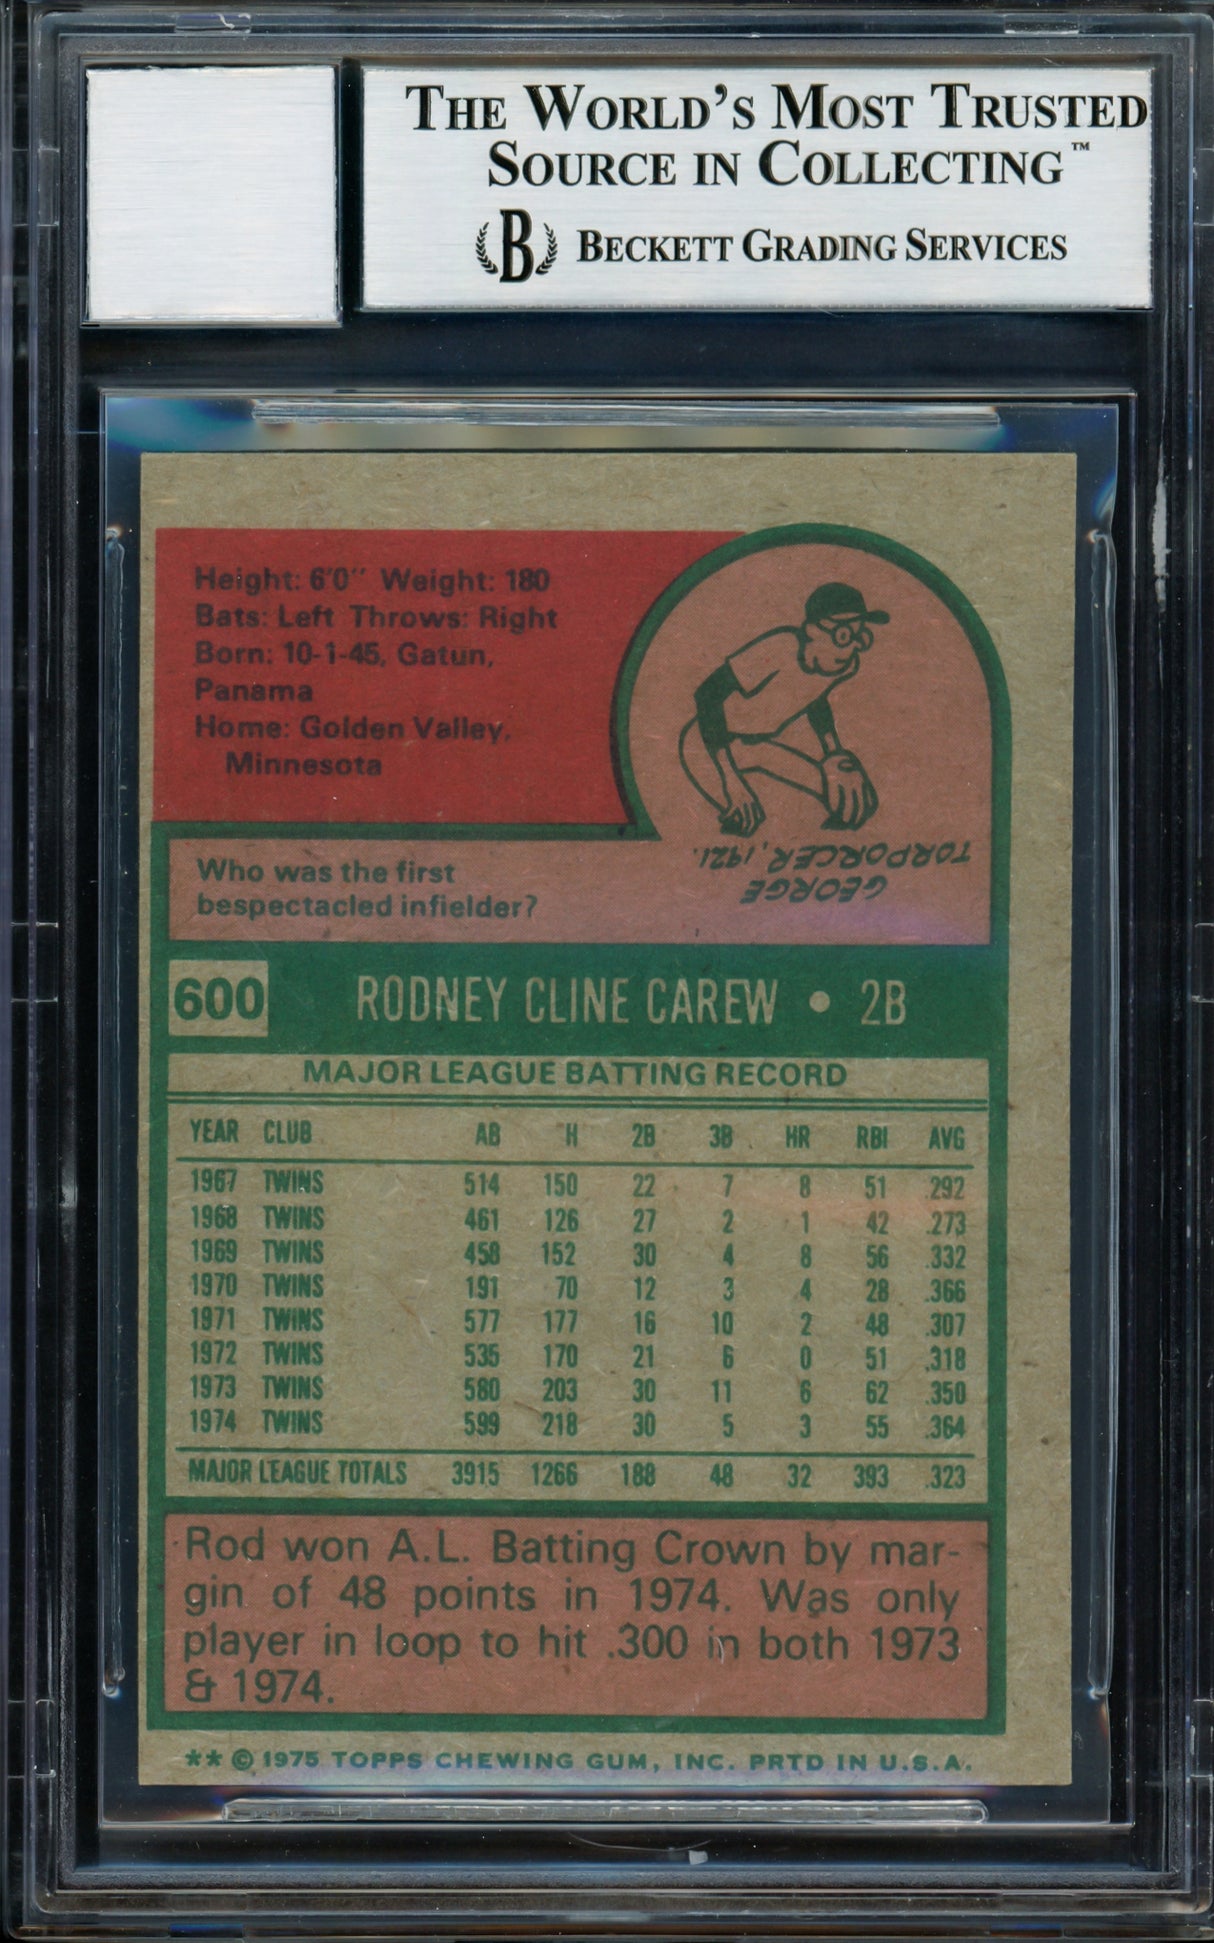 Rod Carew Autographed 1975 Topps Card #600 Minnesota Twins Beckett BAS Stock #211231